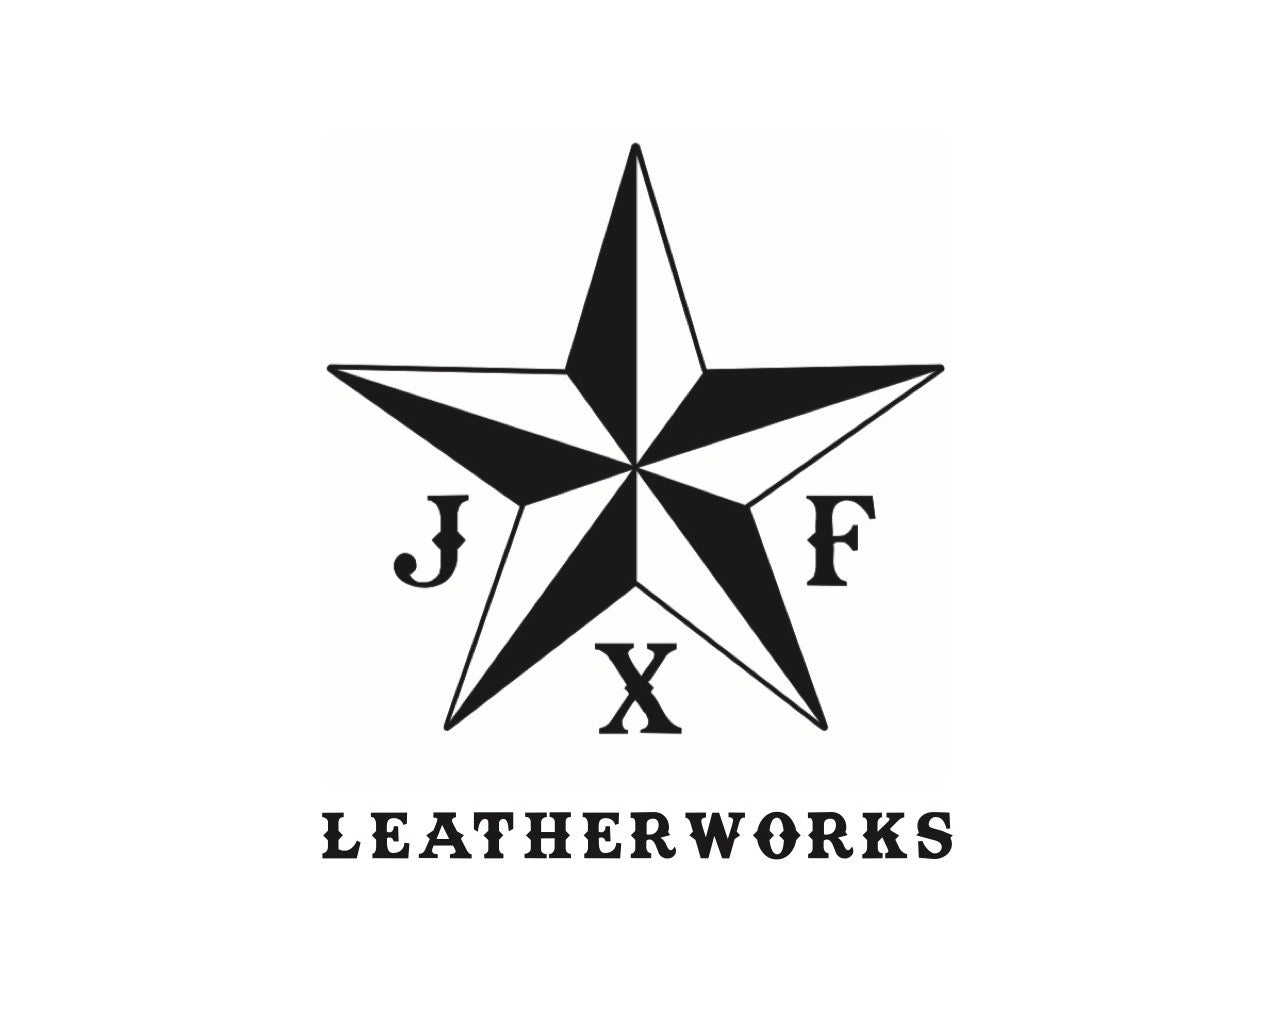 JXF Leatherworks